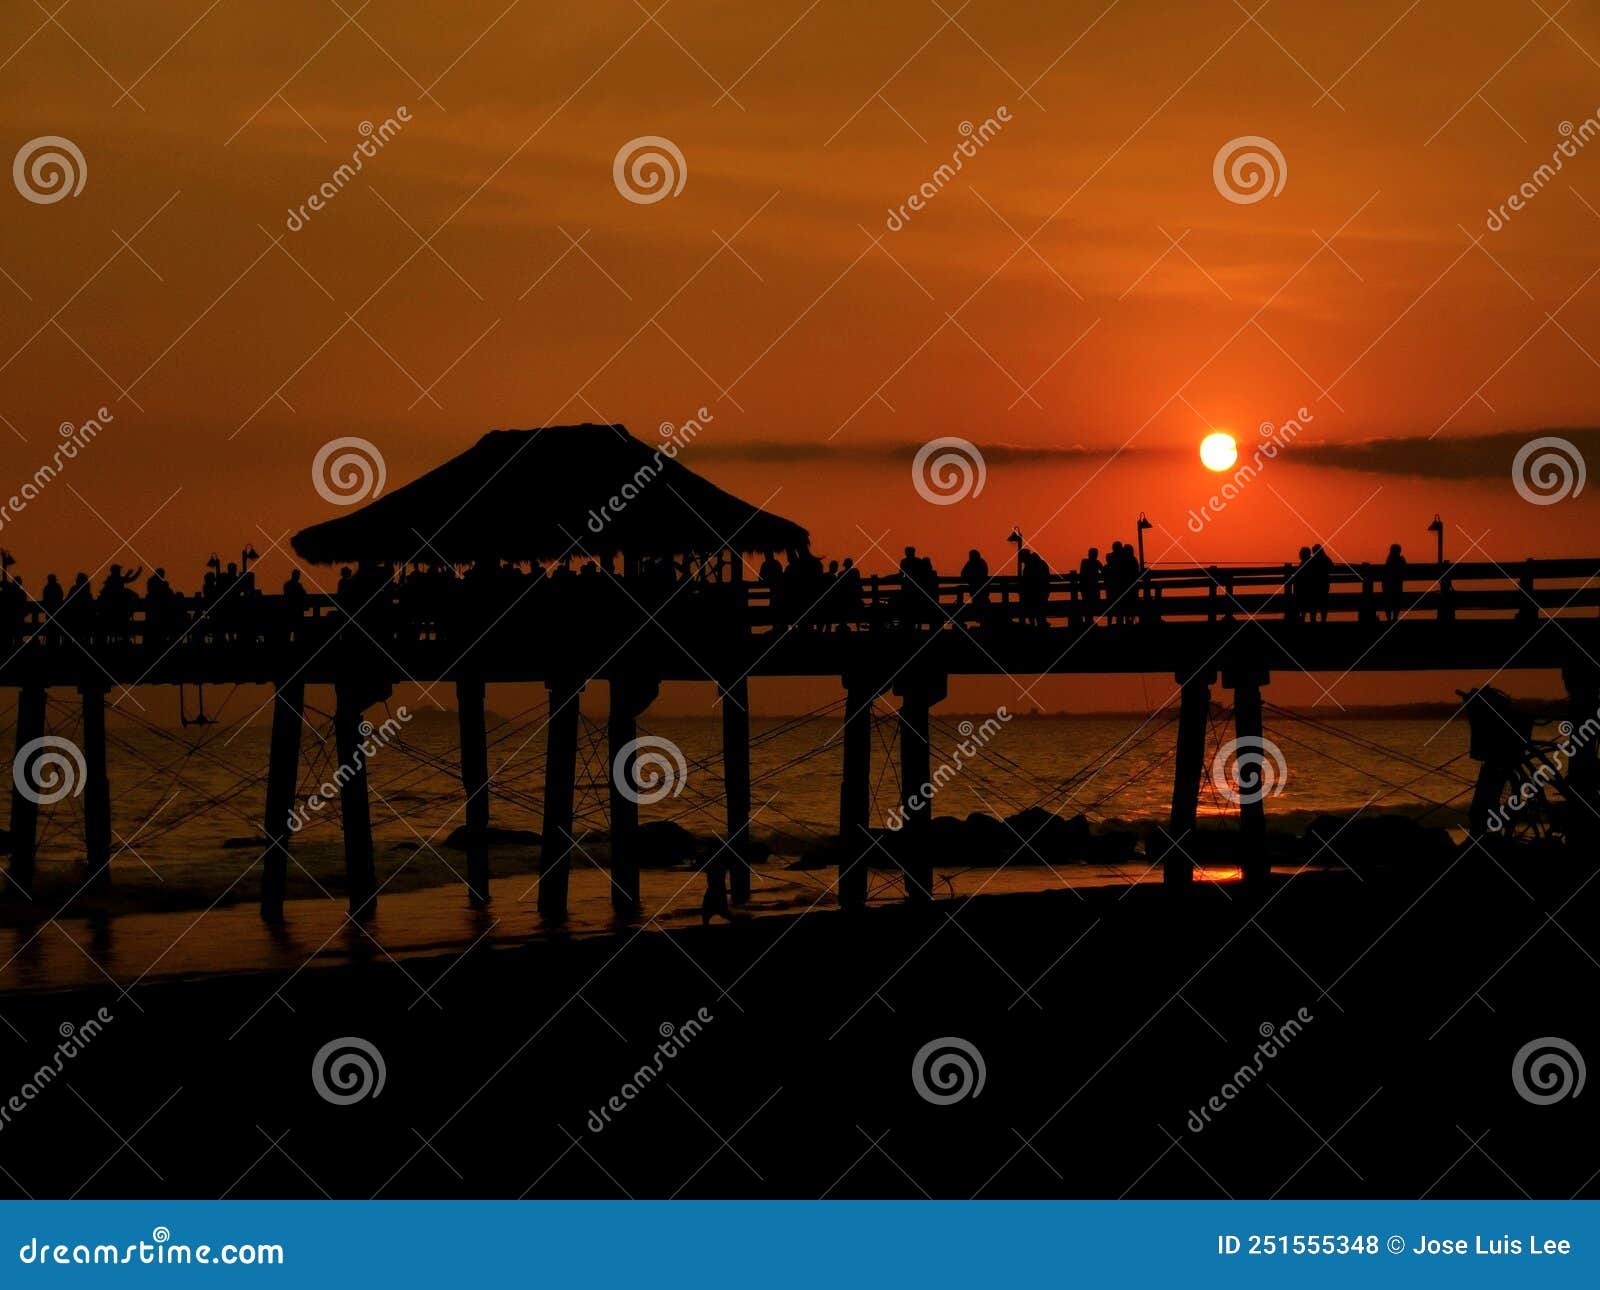 amazing beach sunset behind the pier